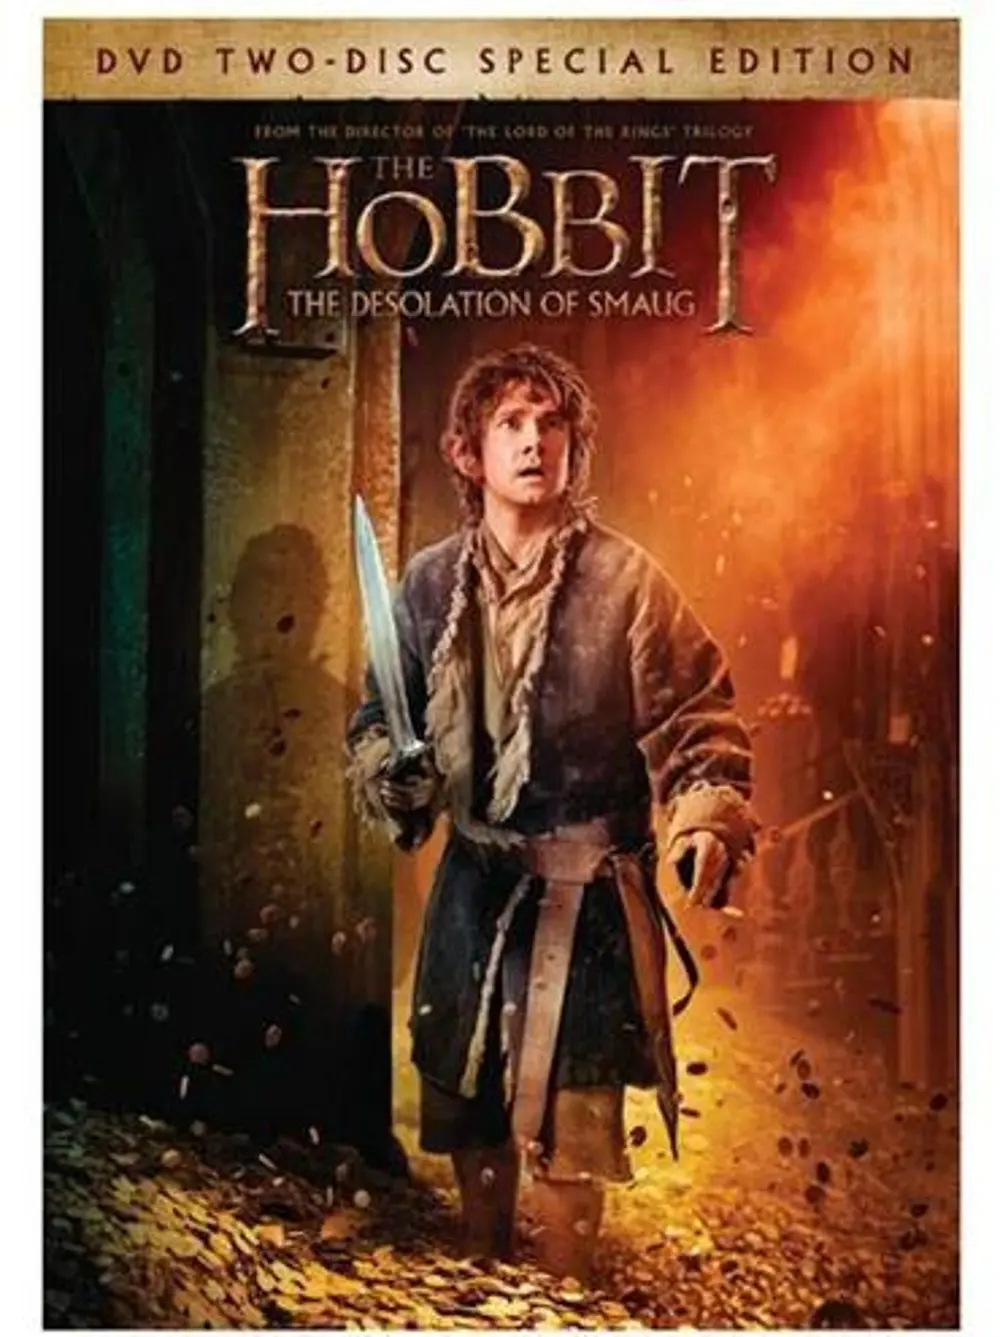 The Hobbit: The Desolation of Smaug - DVD-1